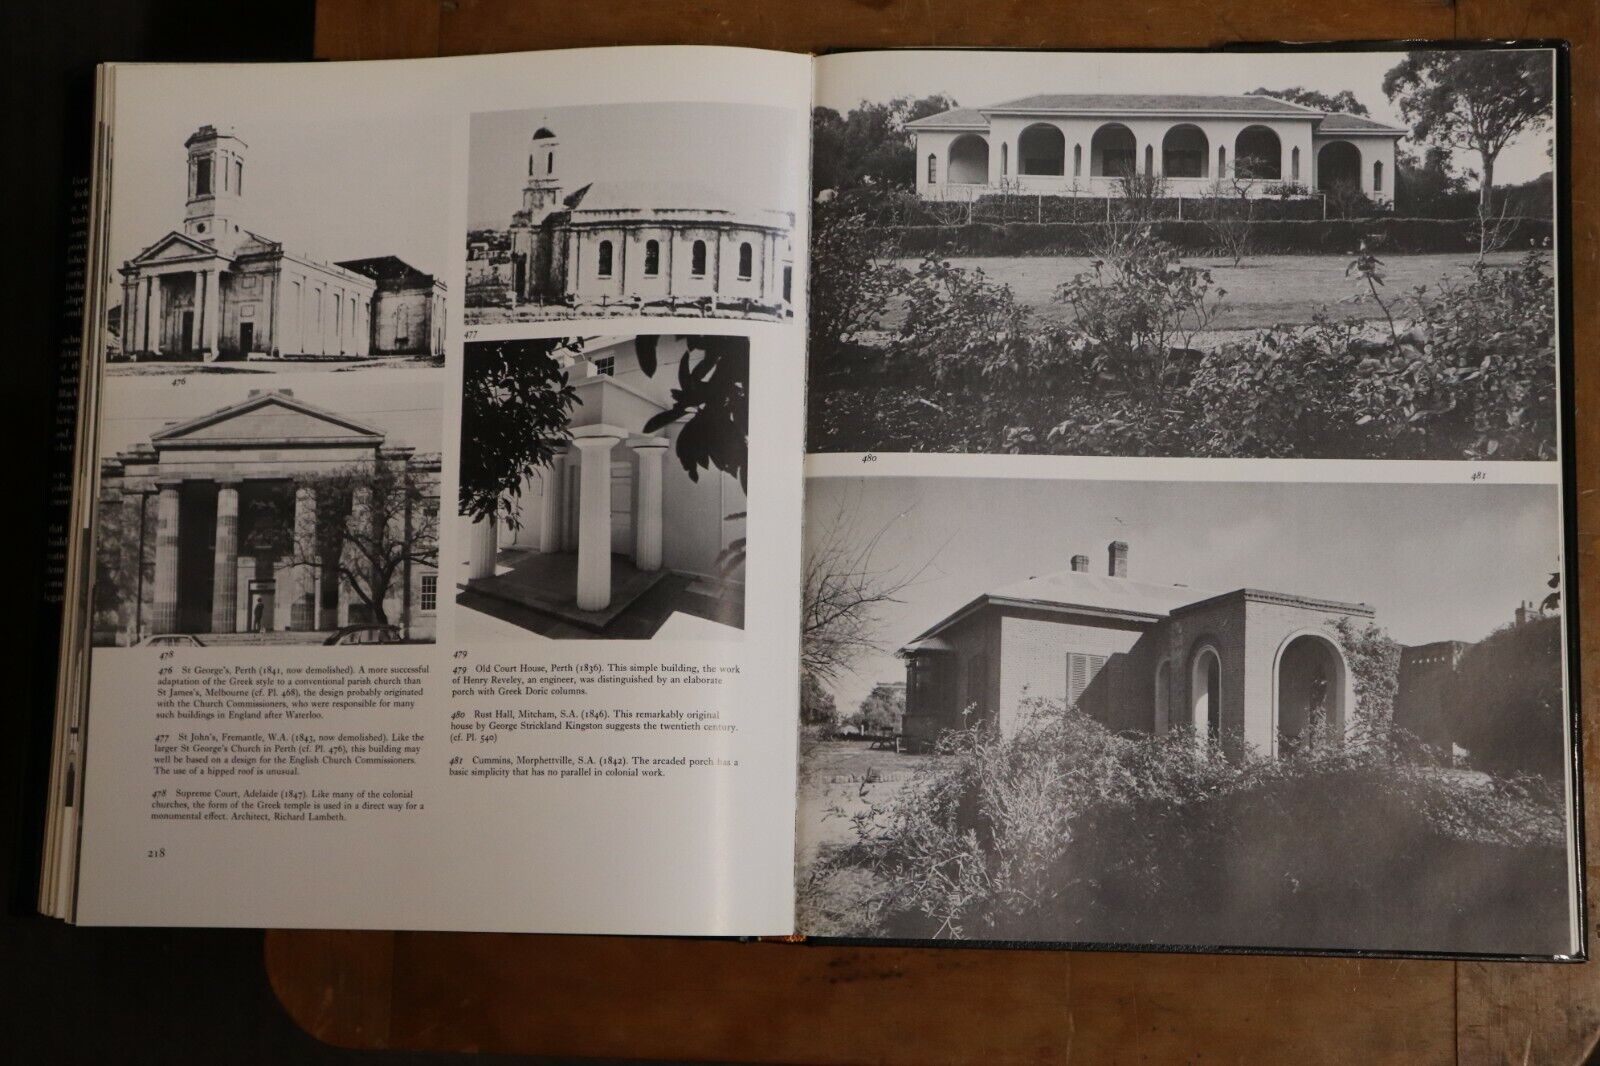 Australian Colonial Architecture - 1978 - 1st Edition Architecture Book